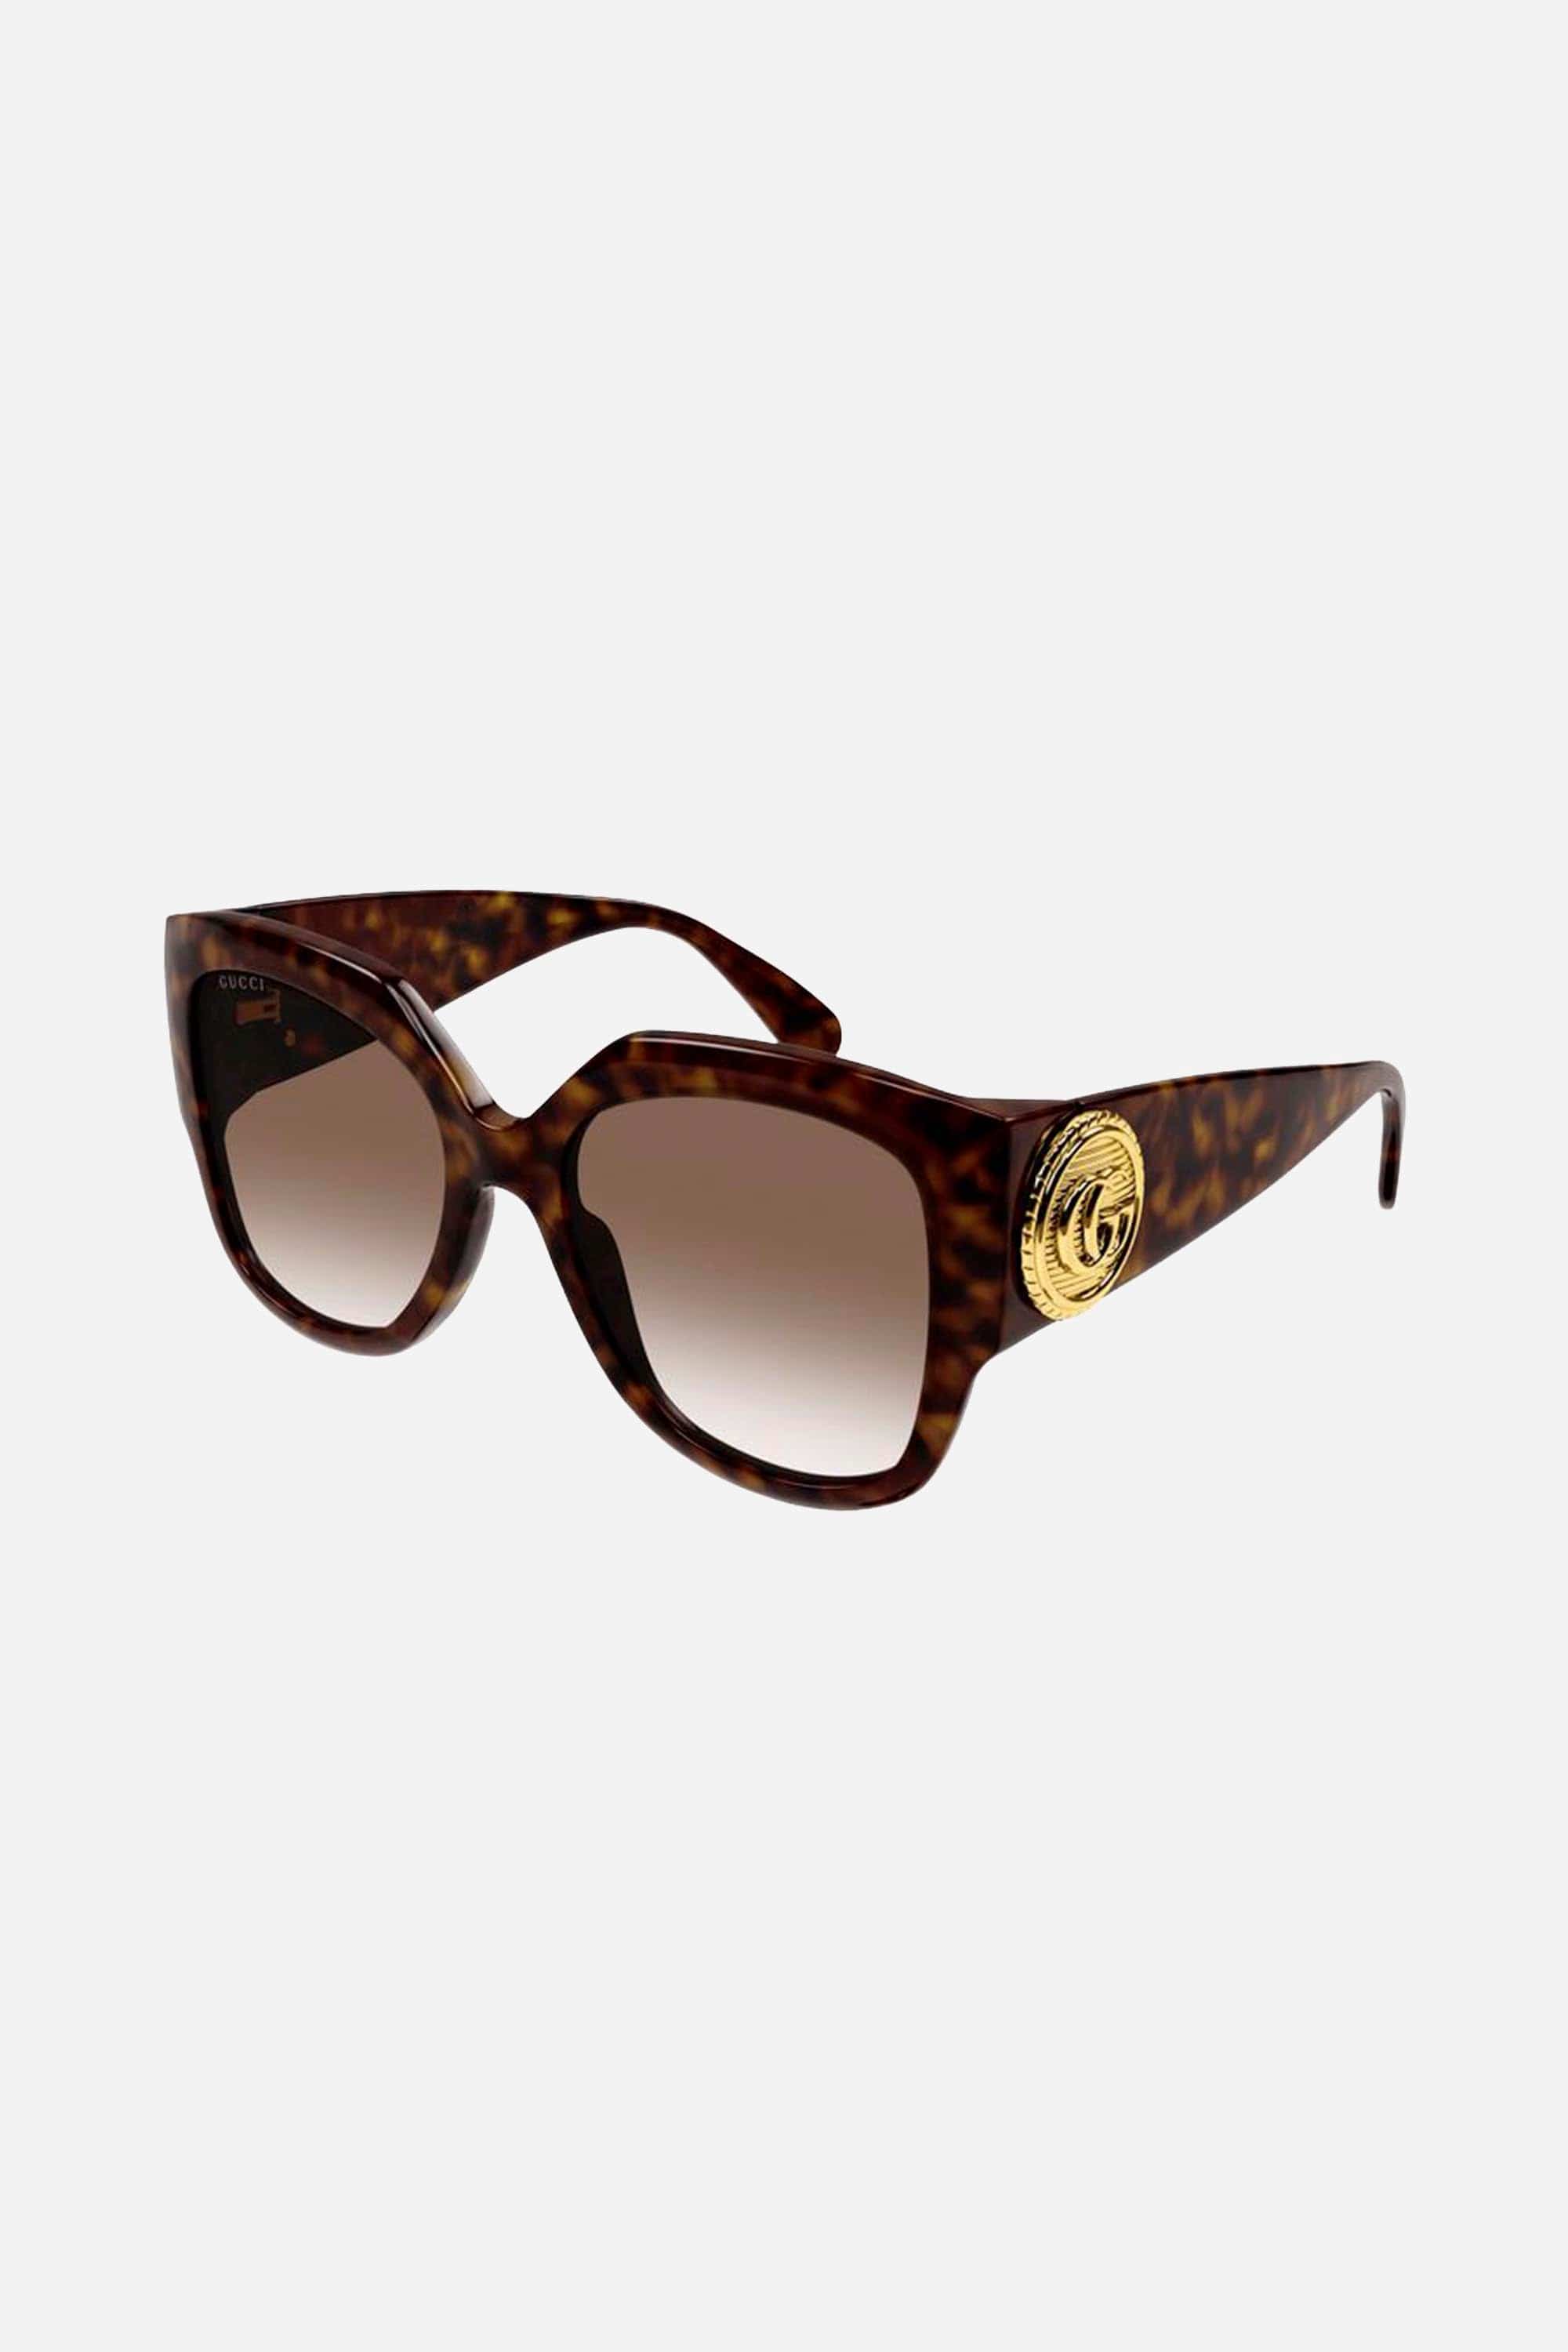 Gucci oversized butterfly havana sunglasses - Eyewear Club